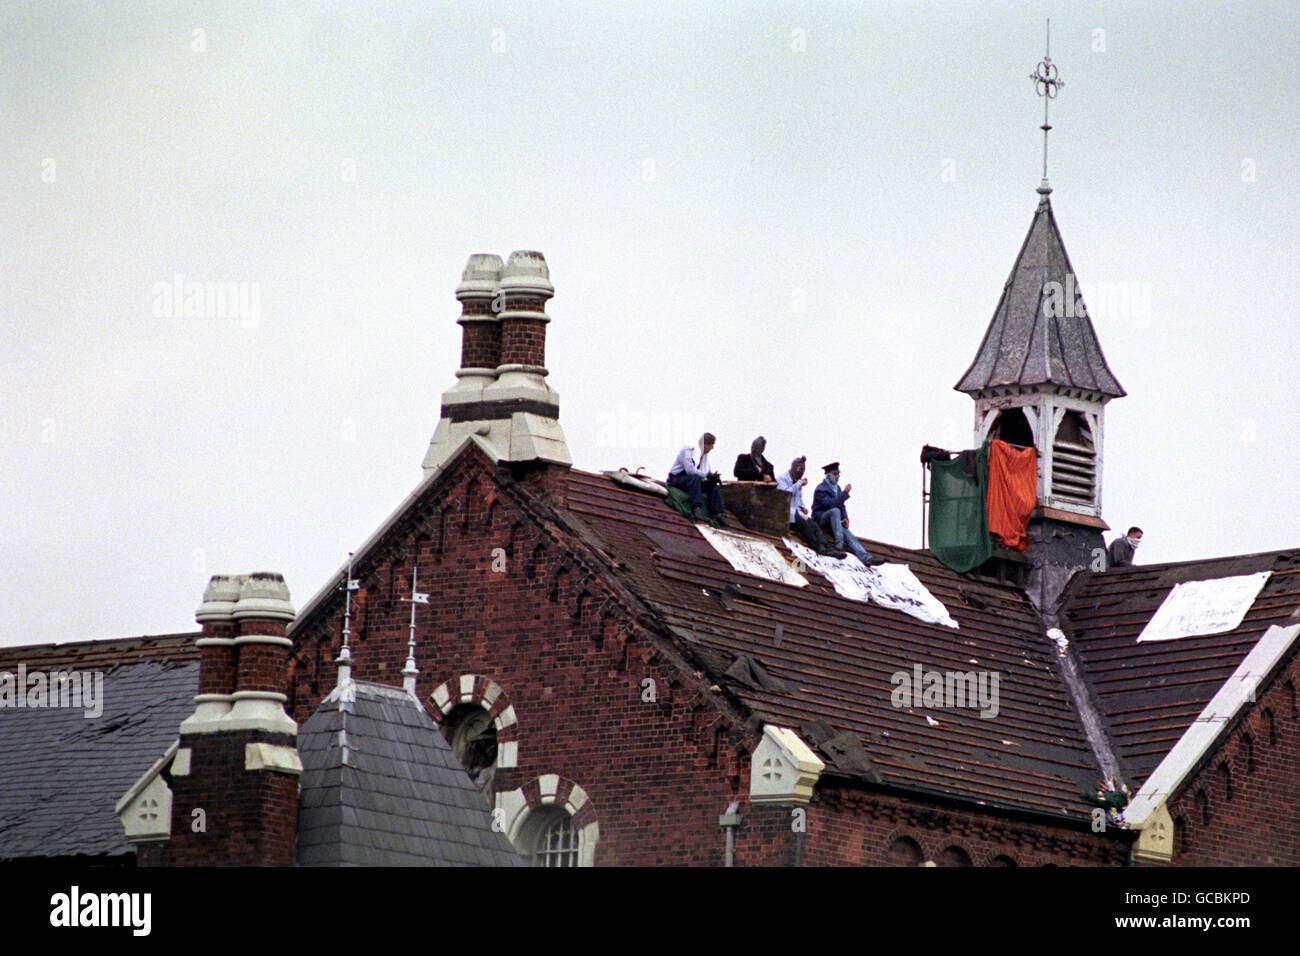 Crime - Strangeways Prison Riot - Manchester. Prisoners on the roof of Strangeways Prison in Manchester during the riot. Stock Photo